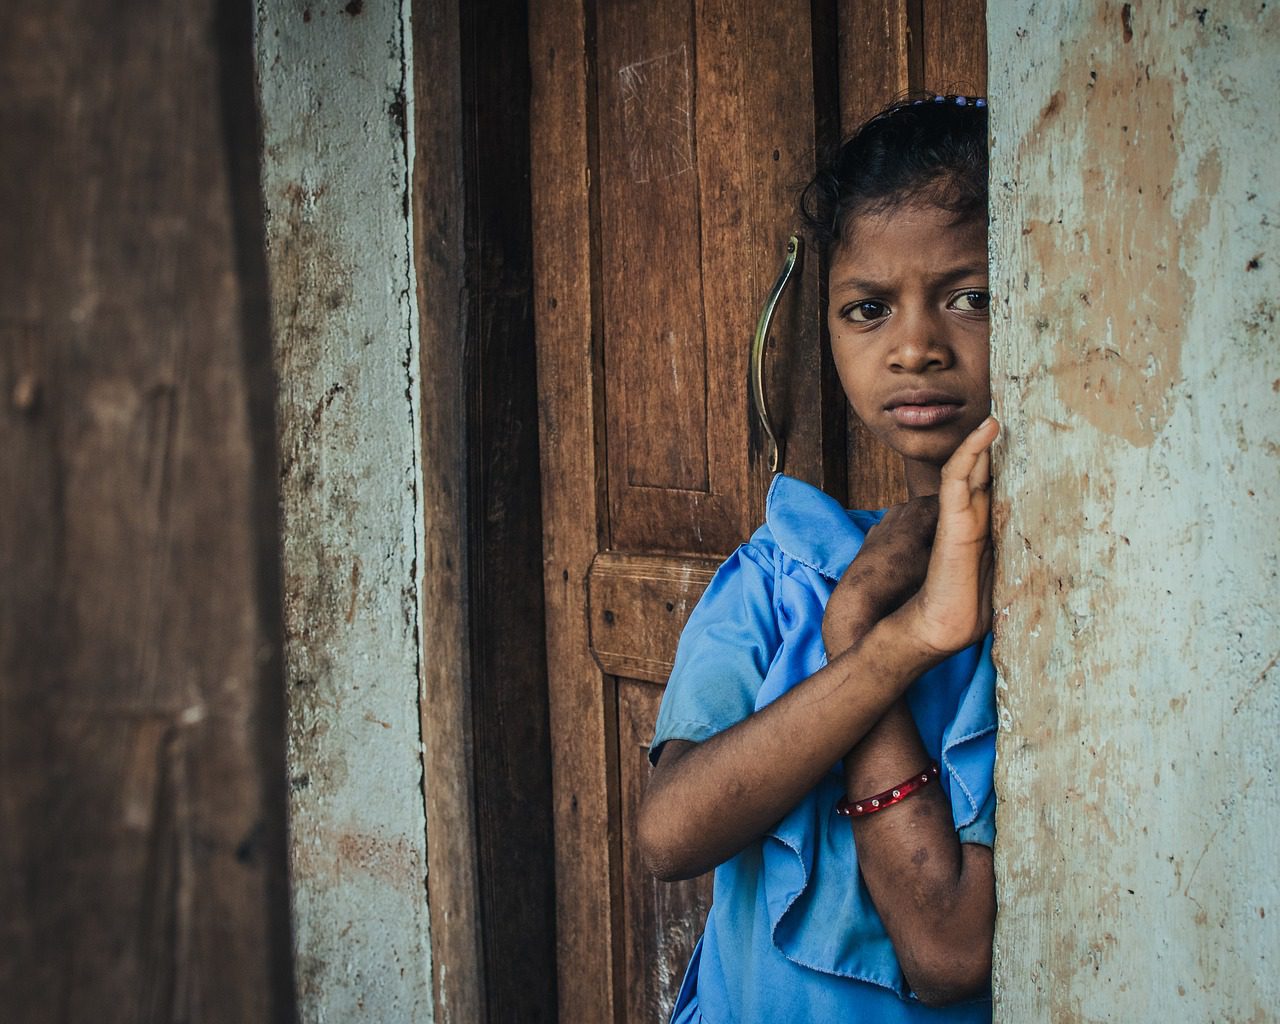 Female child poverty in India